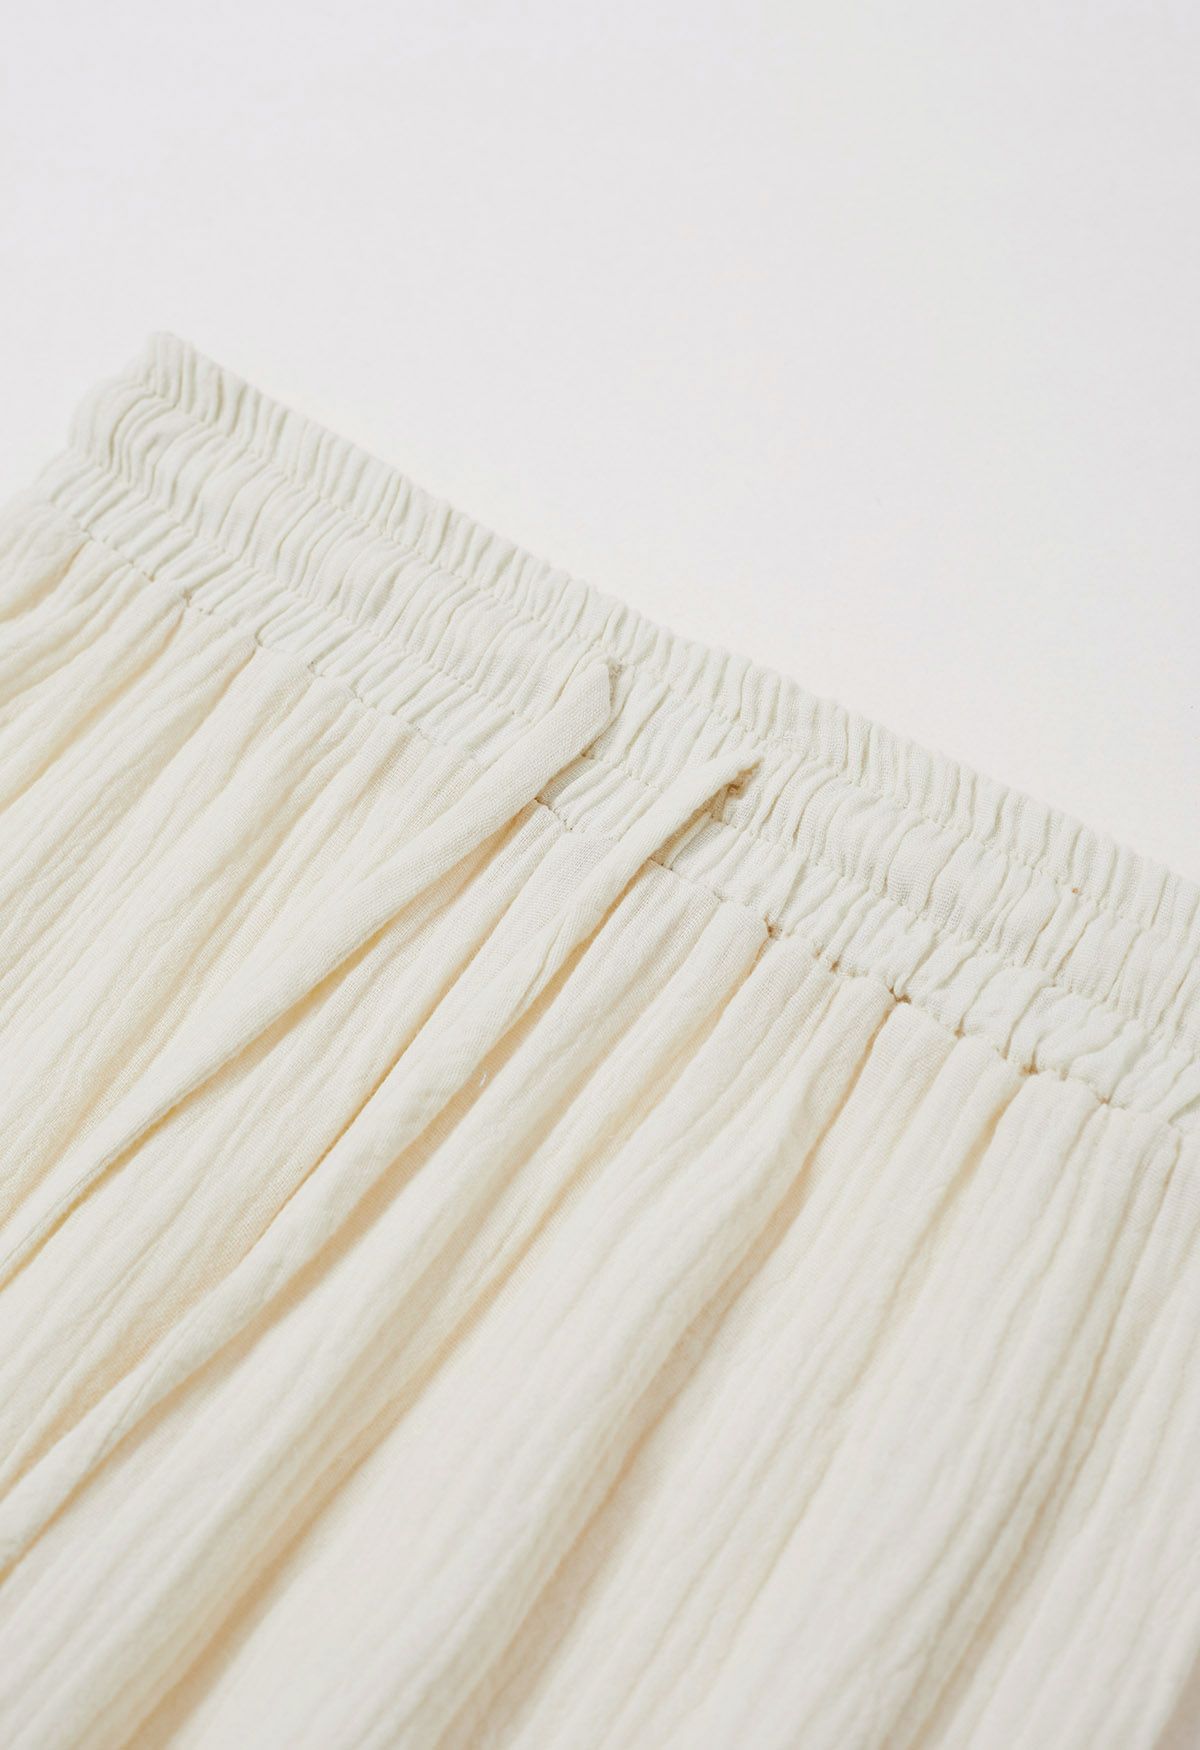 Lightweight Cotton Drawstring Pants in Cream